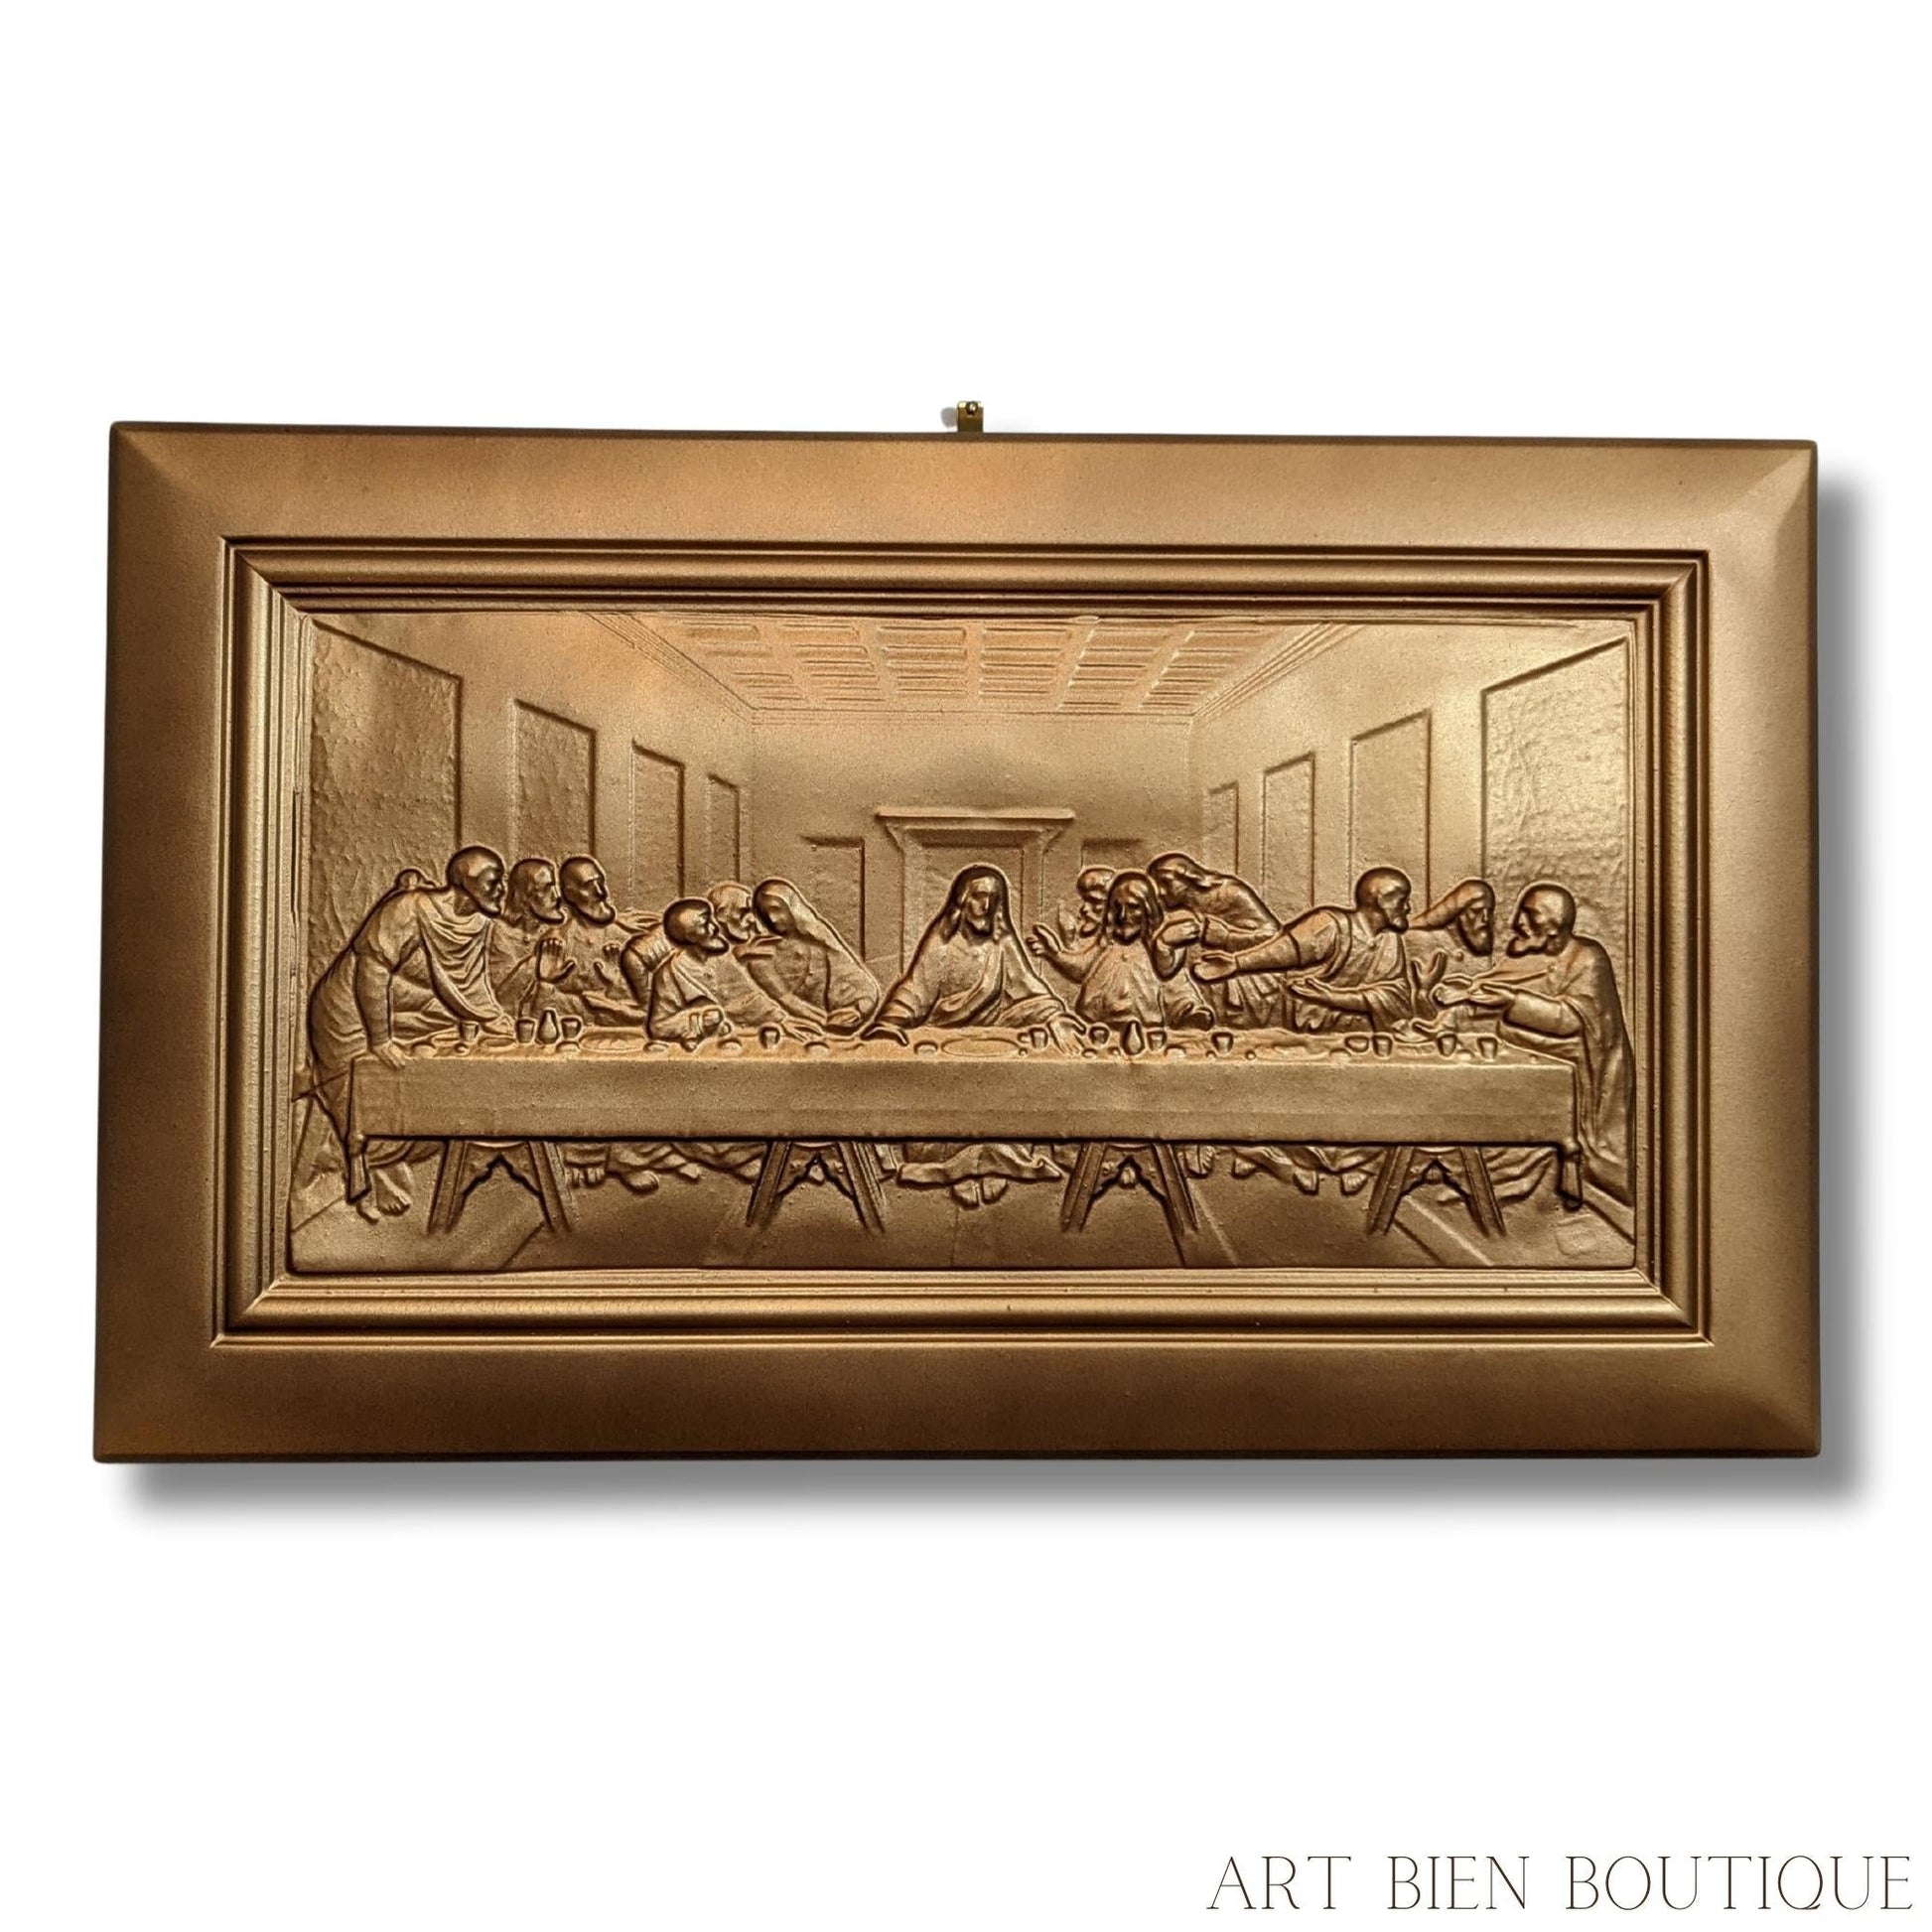 The Last Supper by Leonardo da Vincie - Rosty Market Inc.